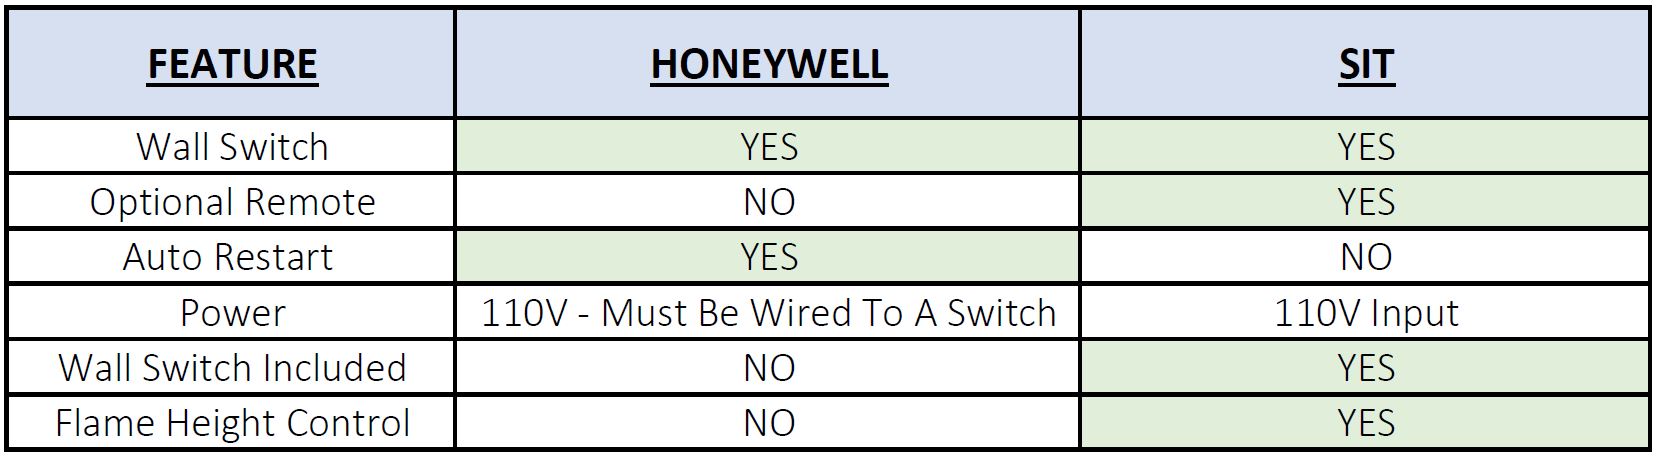 Honeywell - SIT